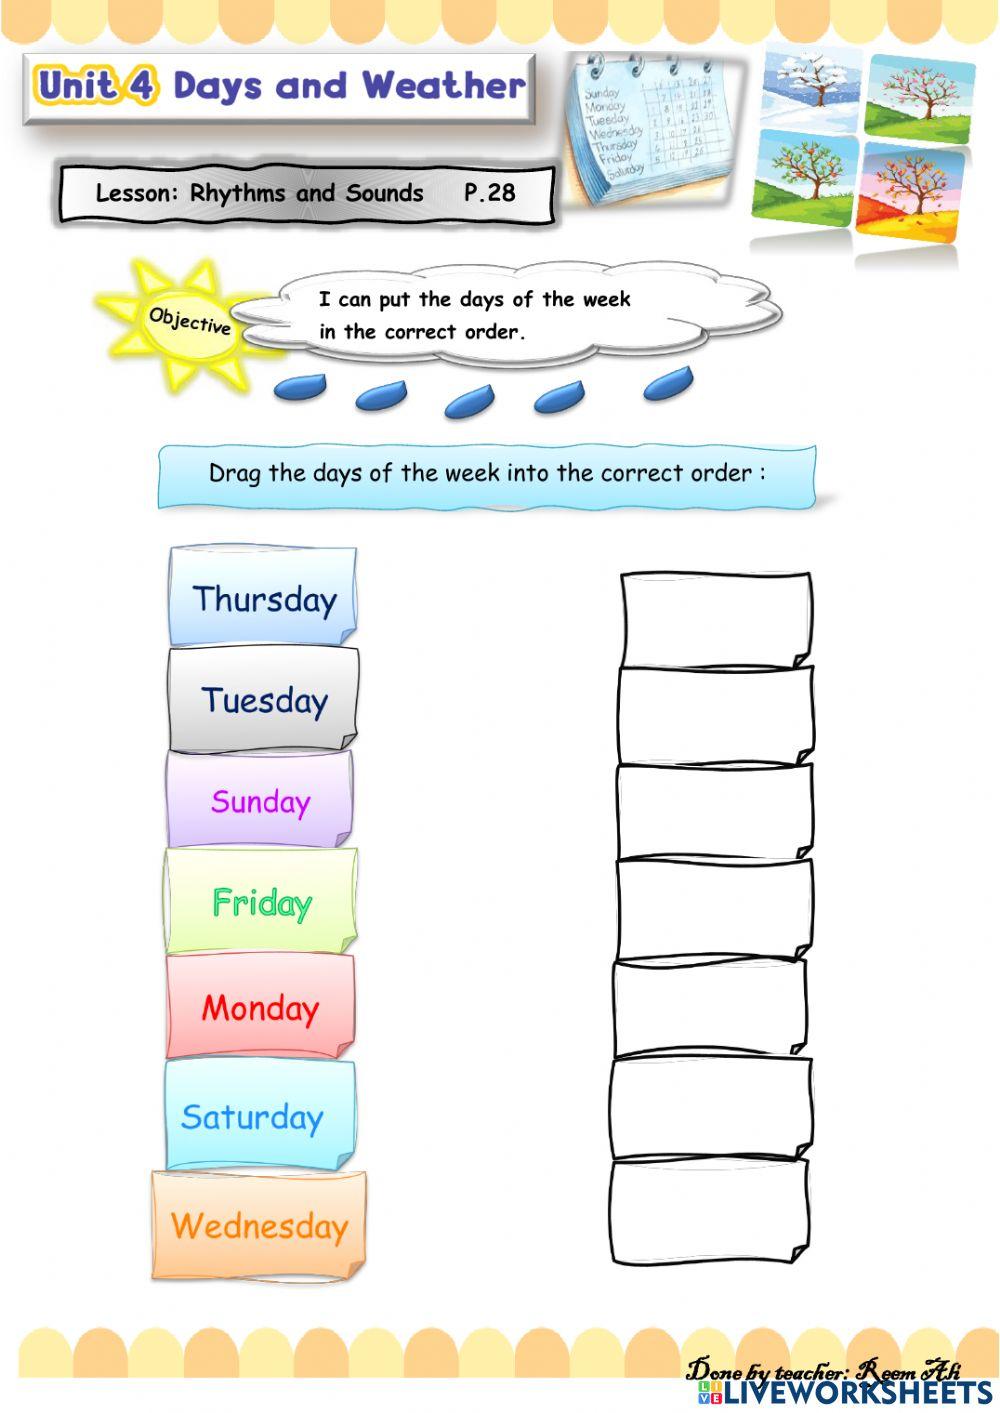 We Can2 U4 L2 : I can put the days of the week in the correct order.